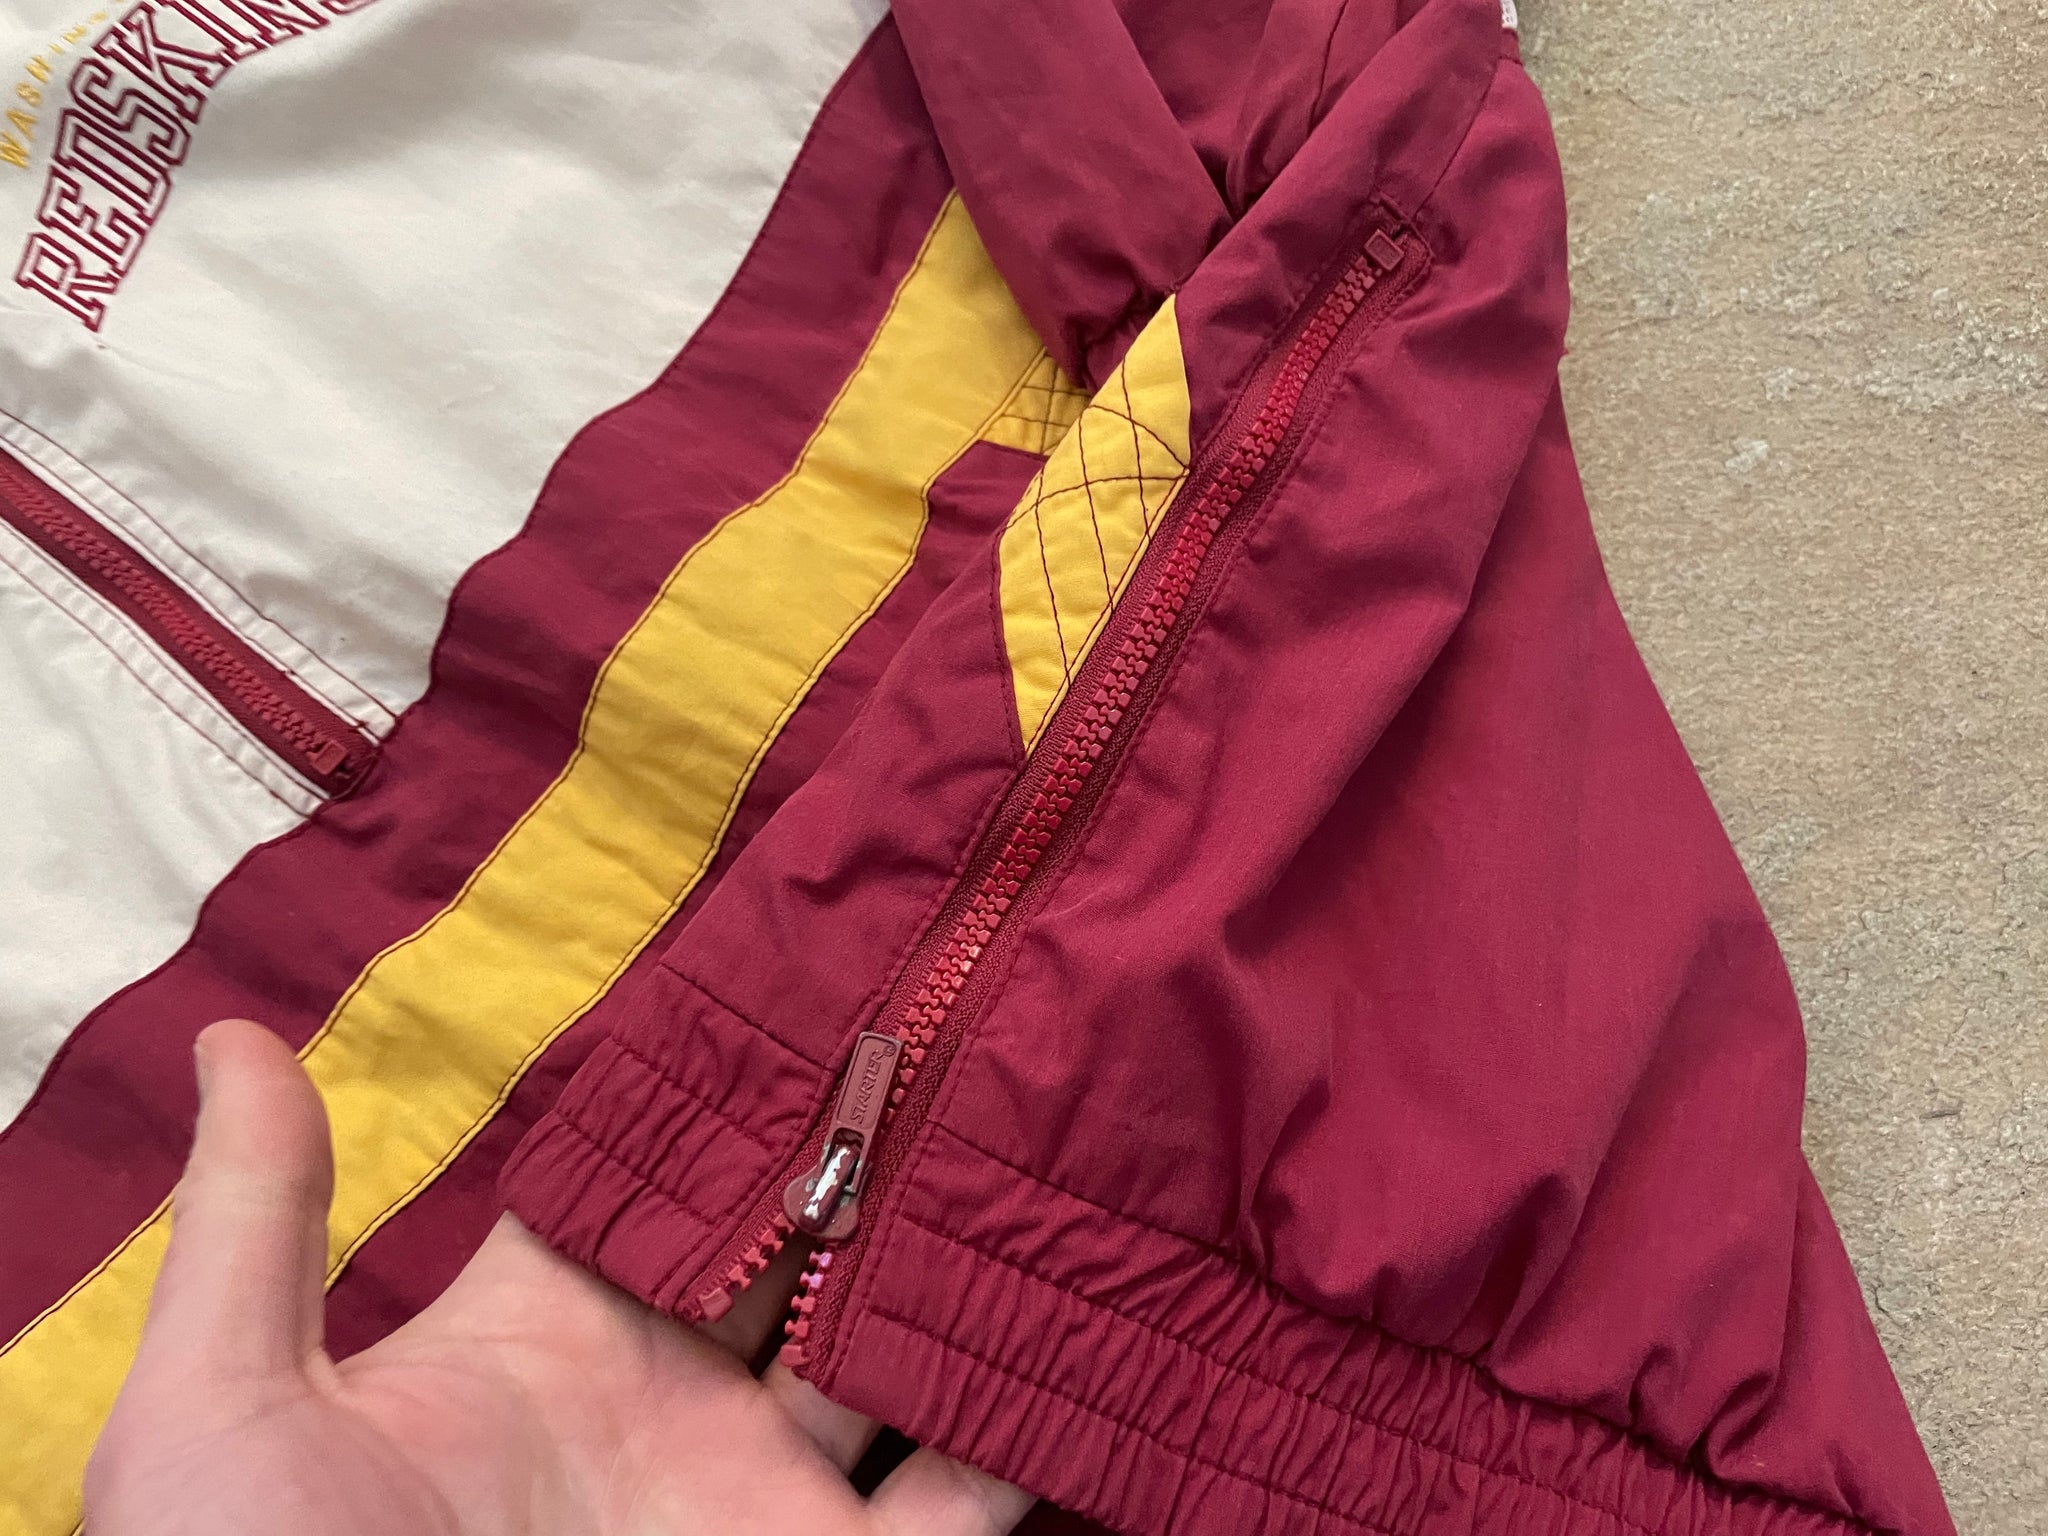 Vintage Washington Redskins Starter Windbreaker Jacket Size Large